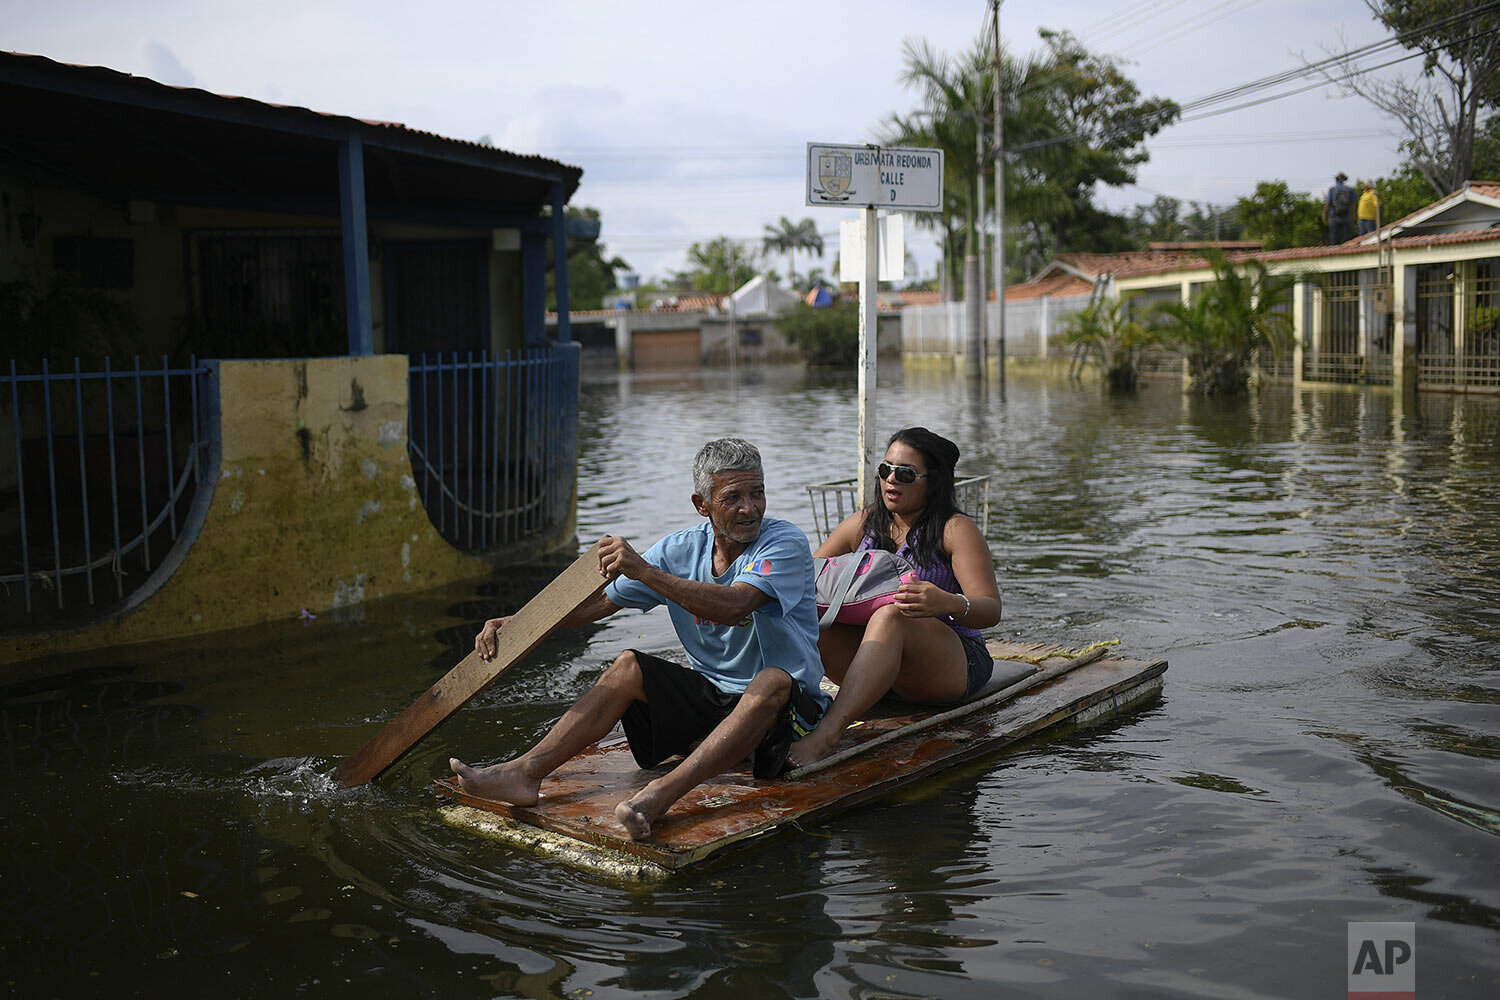  A man utilizes a door as a makeshift raft as he transports a woman through the inundated streets of the Mata Redonda neighborhood of Maracay, Venezuela, Oct. 21, 2020. (AP Photo/Matias Delacroix) 